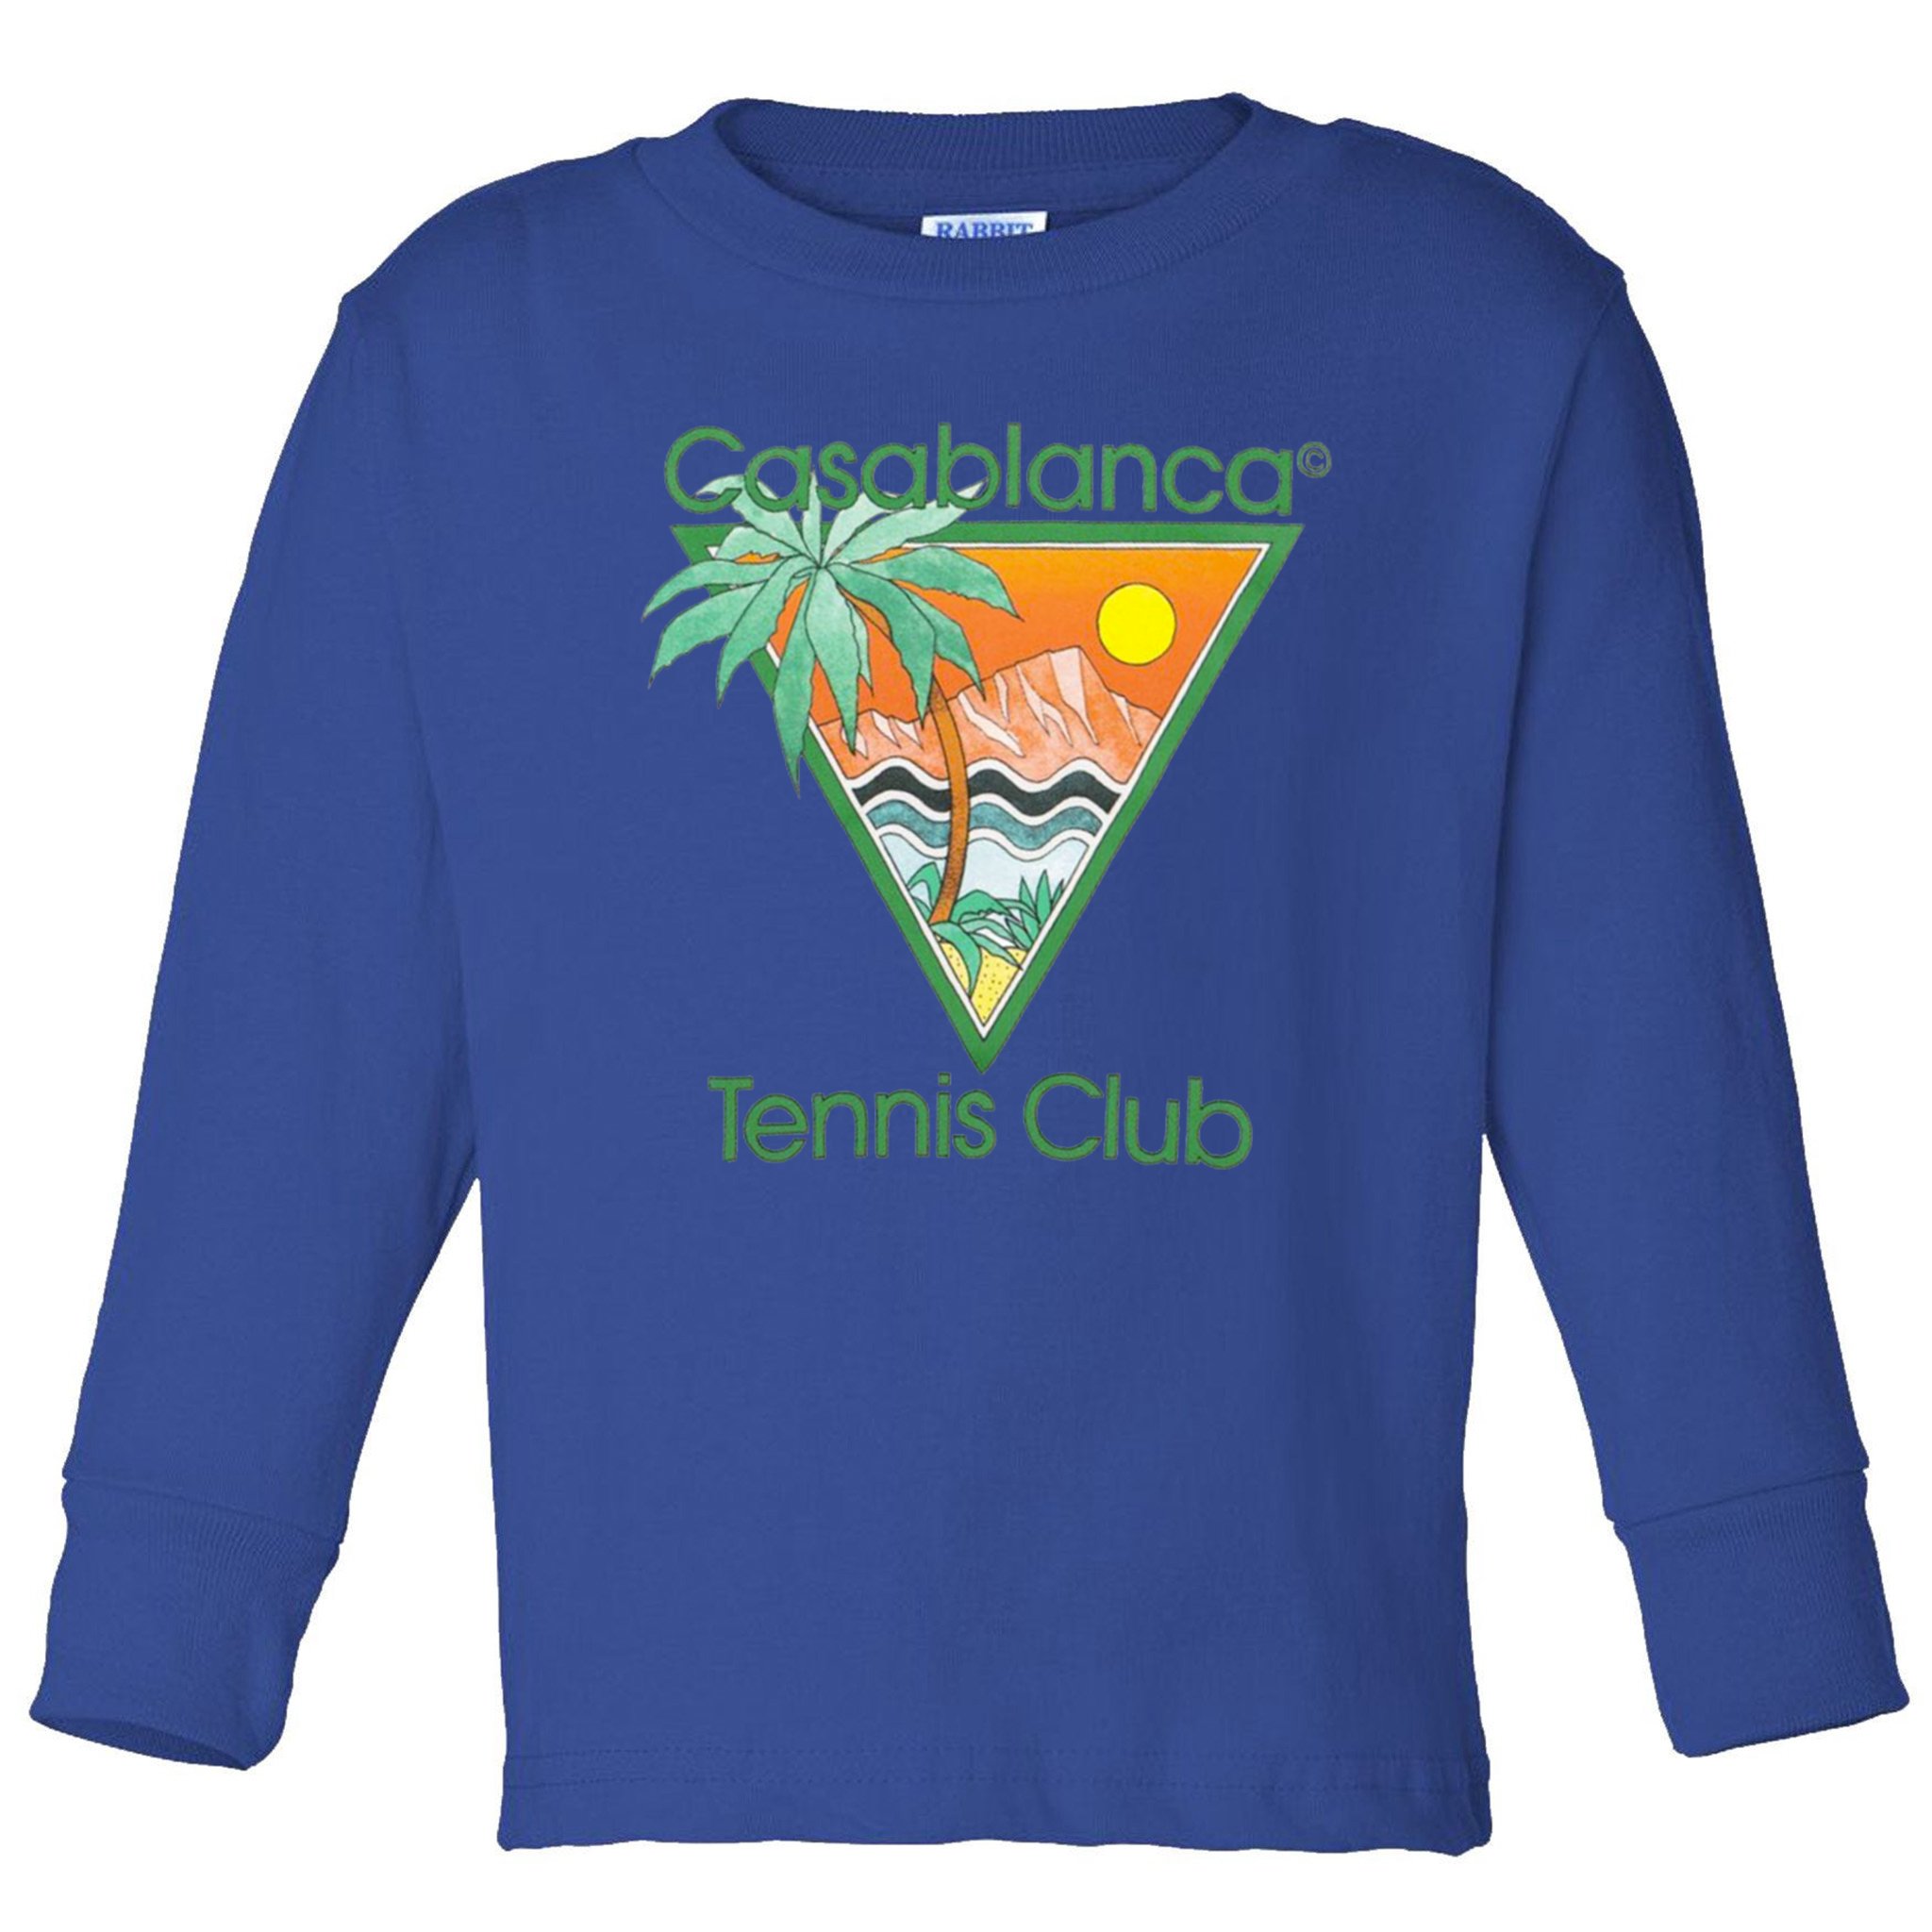 Casablanca Tennis Club Cute Gift Toddler Long Sleeve Shirt